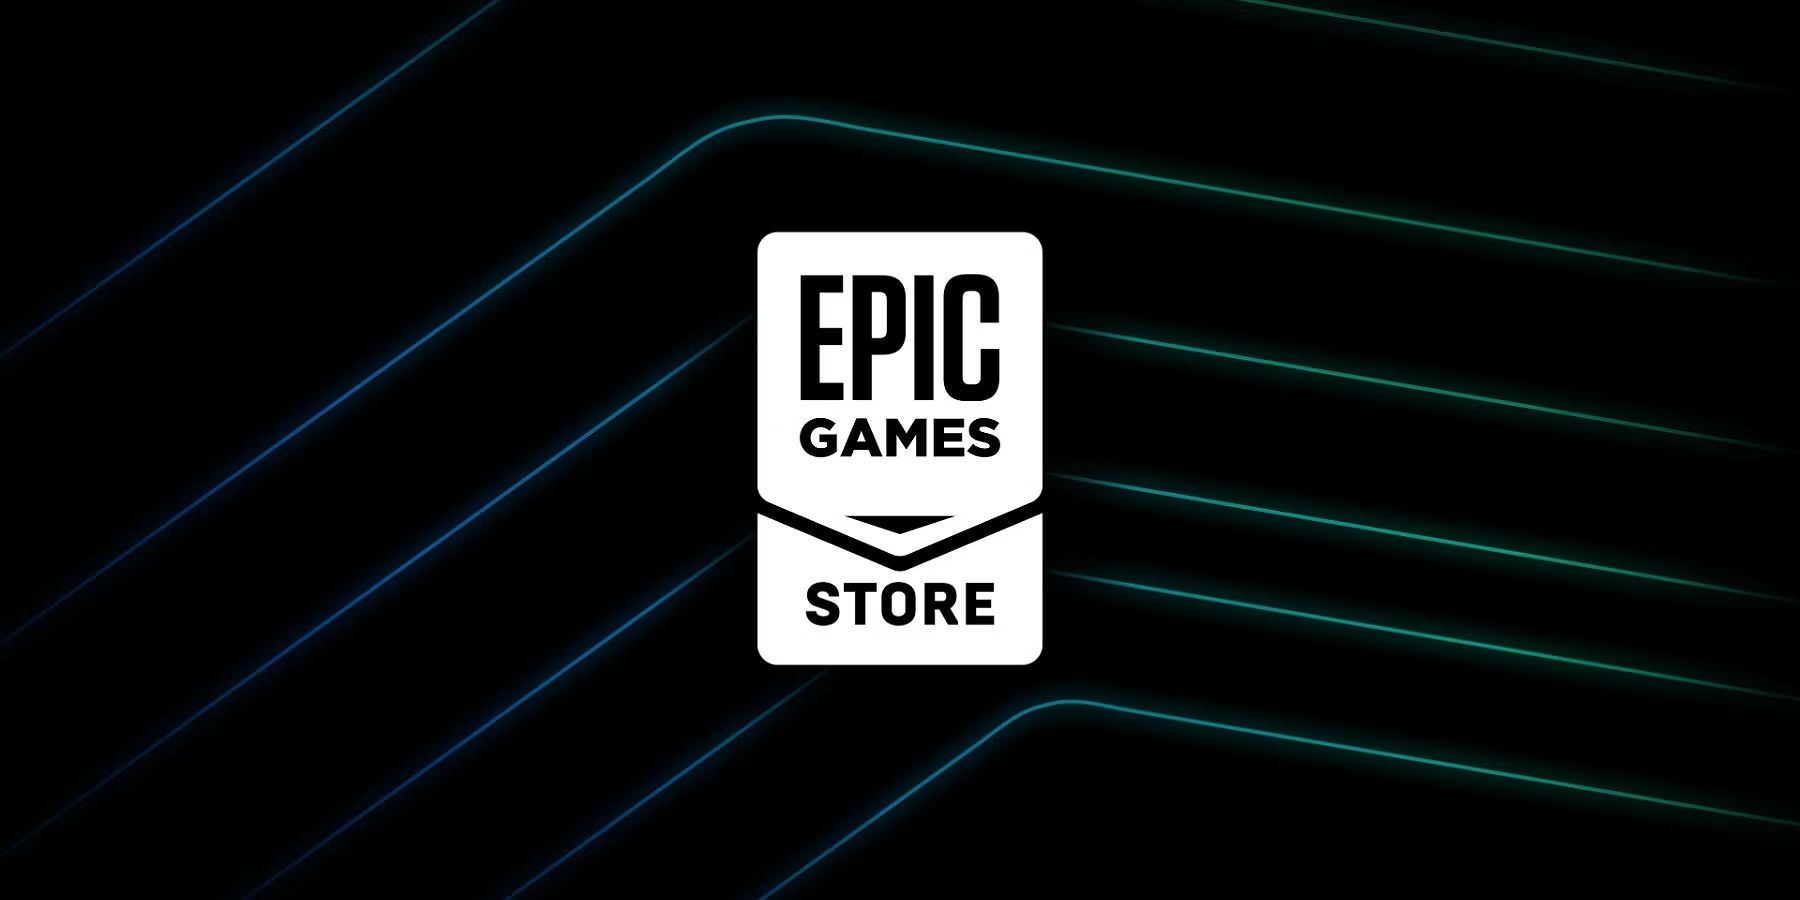 Próxima Promoção Black Friday na Epic Games Store - Epic Games Store